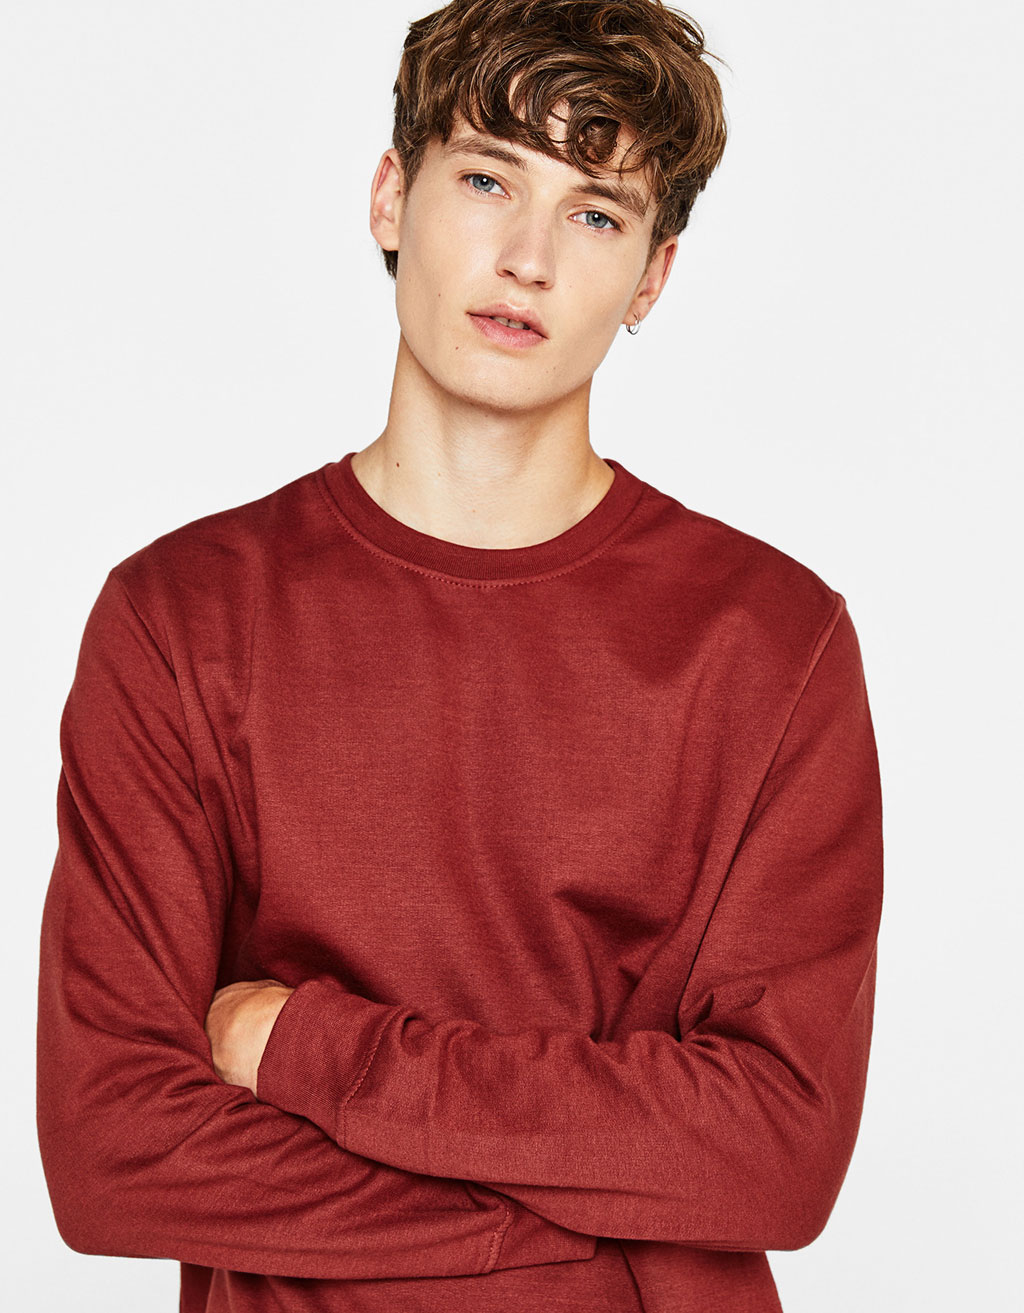 Men's Sweatshirts - Autumn Winter Collection 2017 | Bershka